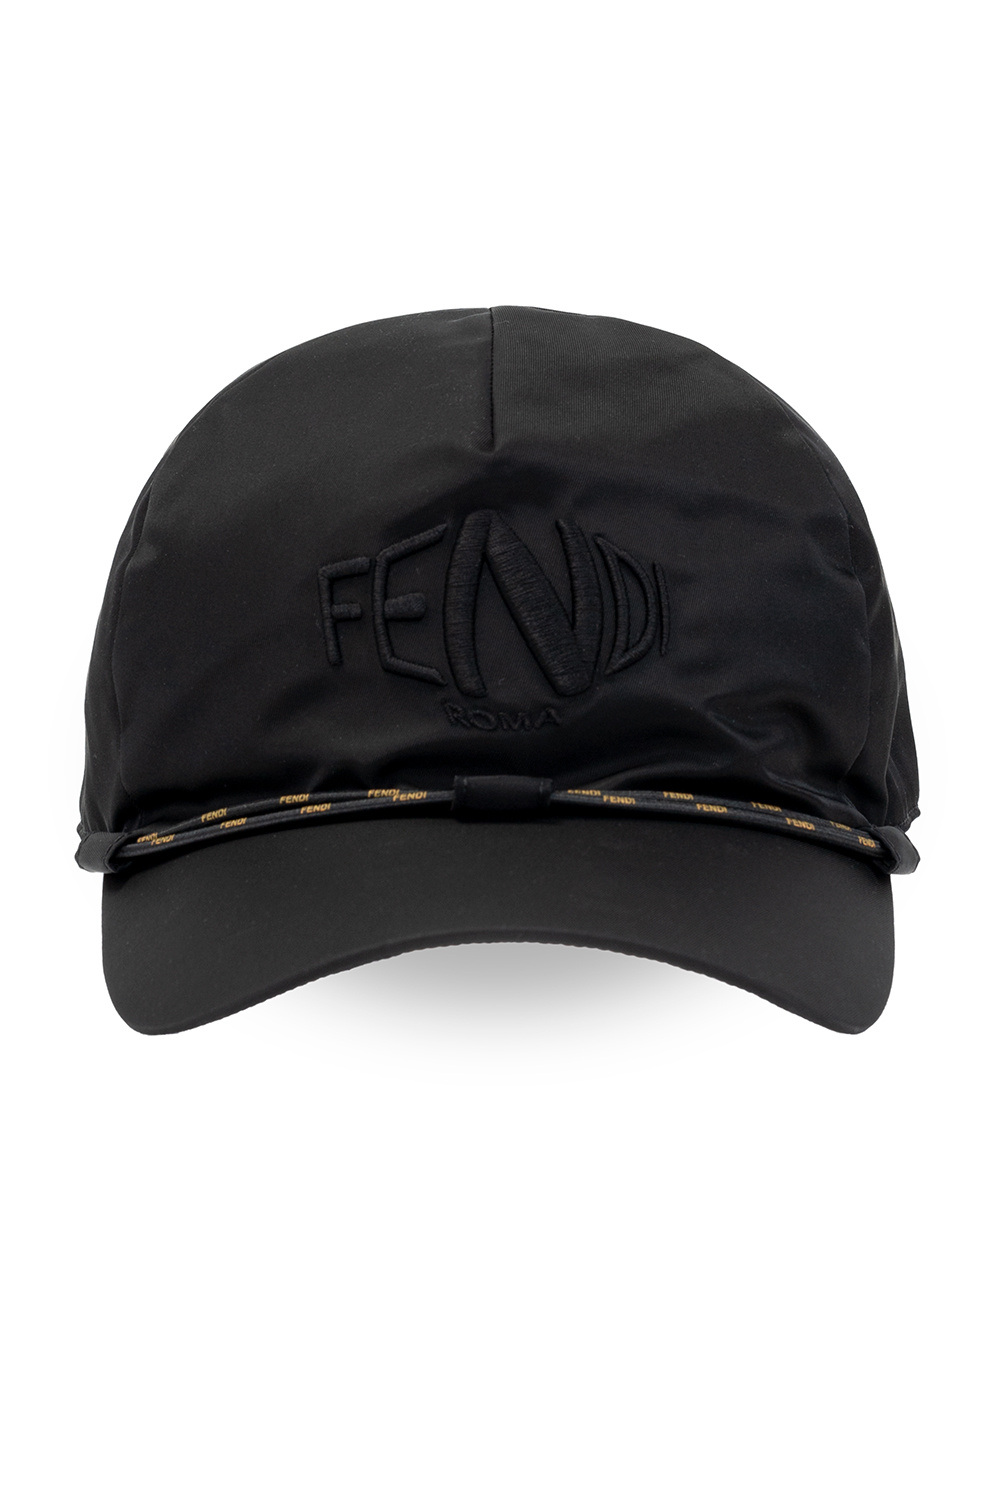 Fendi FENDI Zucca Canvas Leather Back Pack Ruck Sack Brown Black